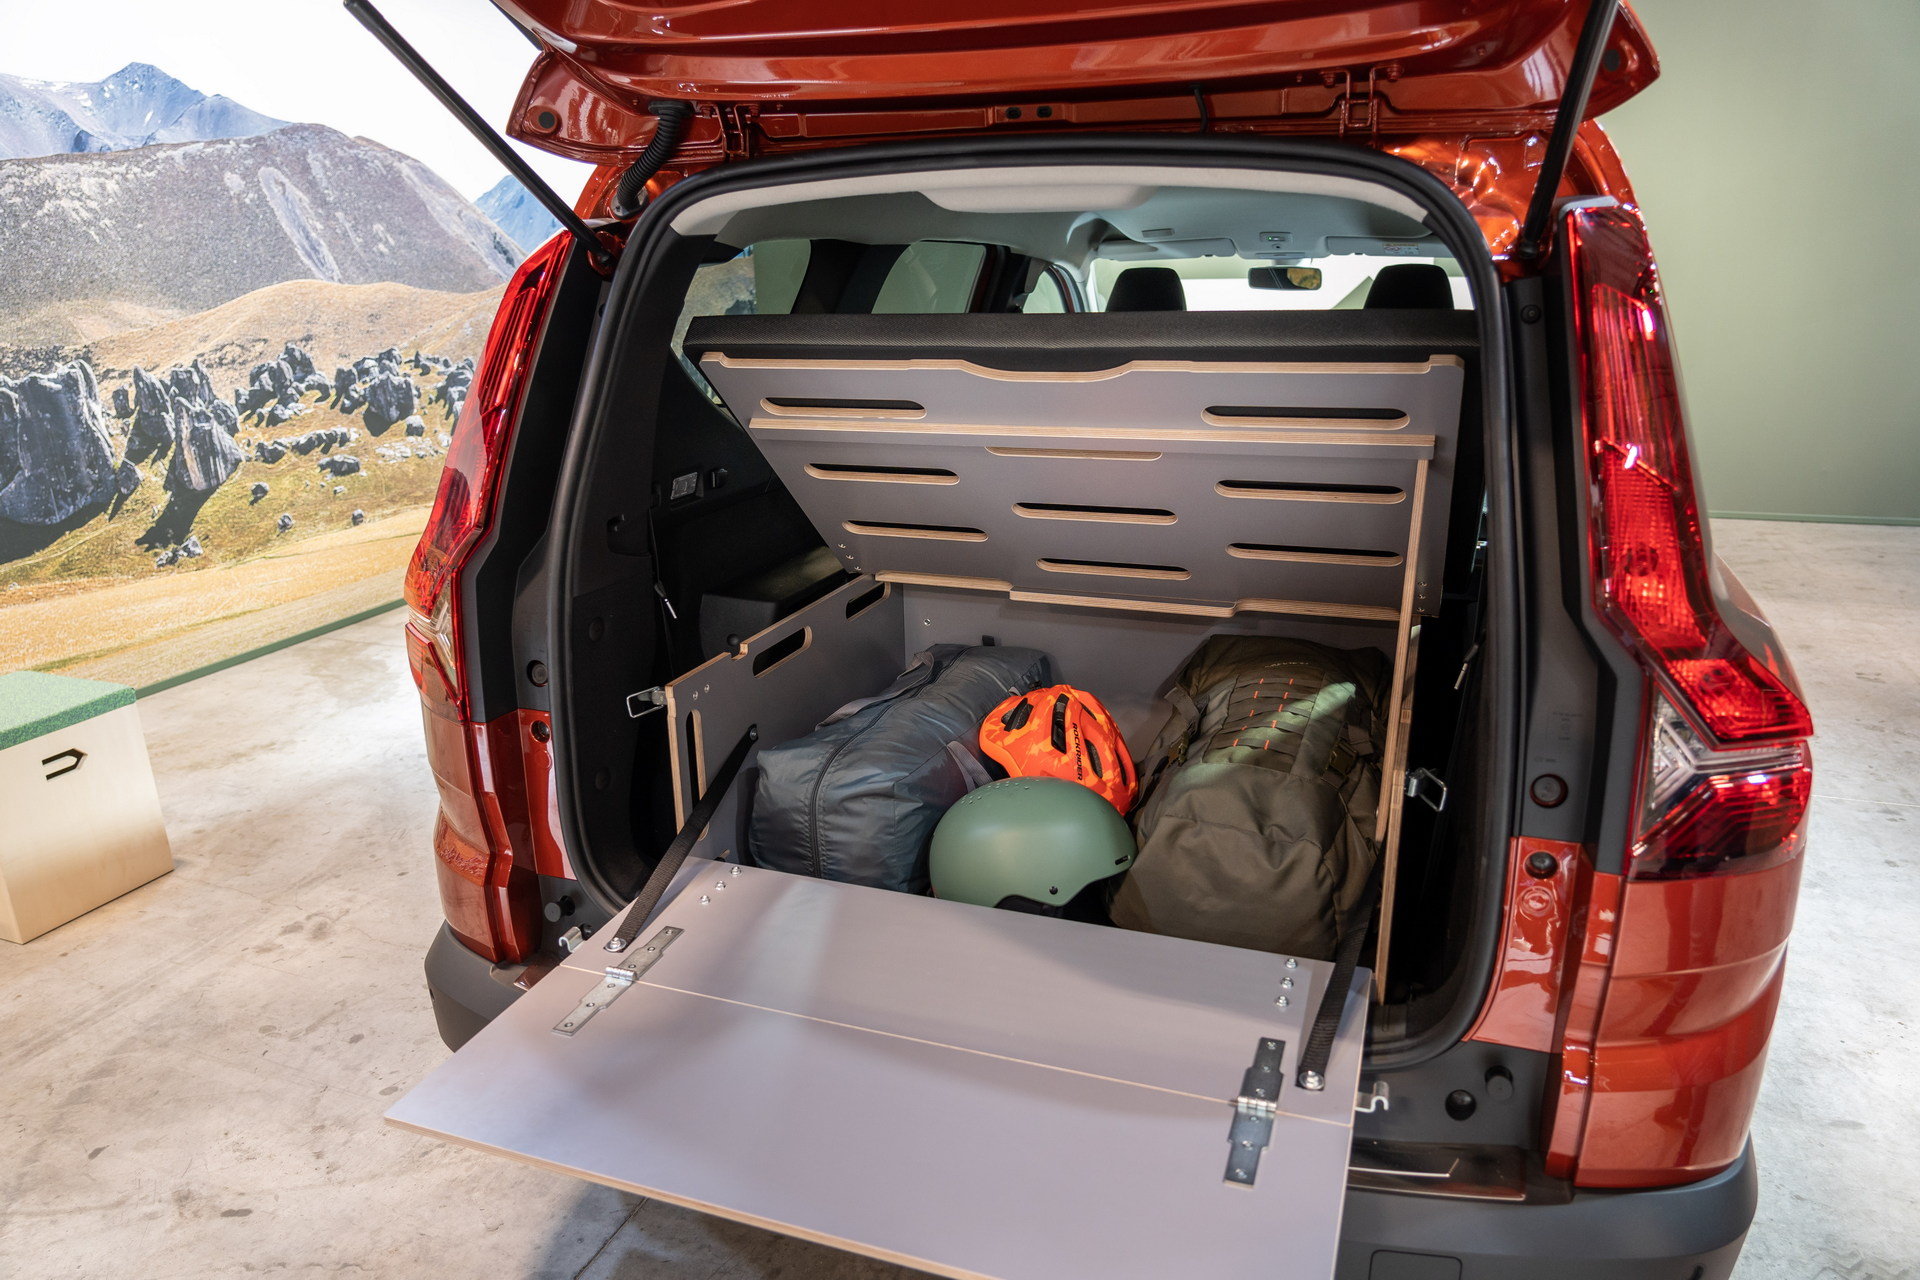 Dacia Jogger DIY Camping Box : r/Dacia